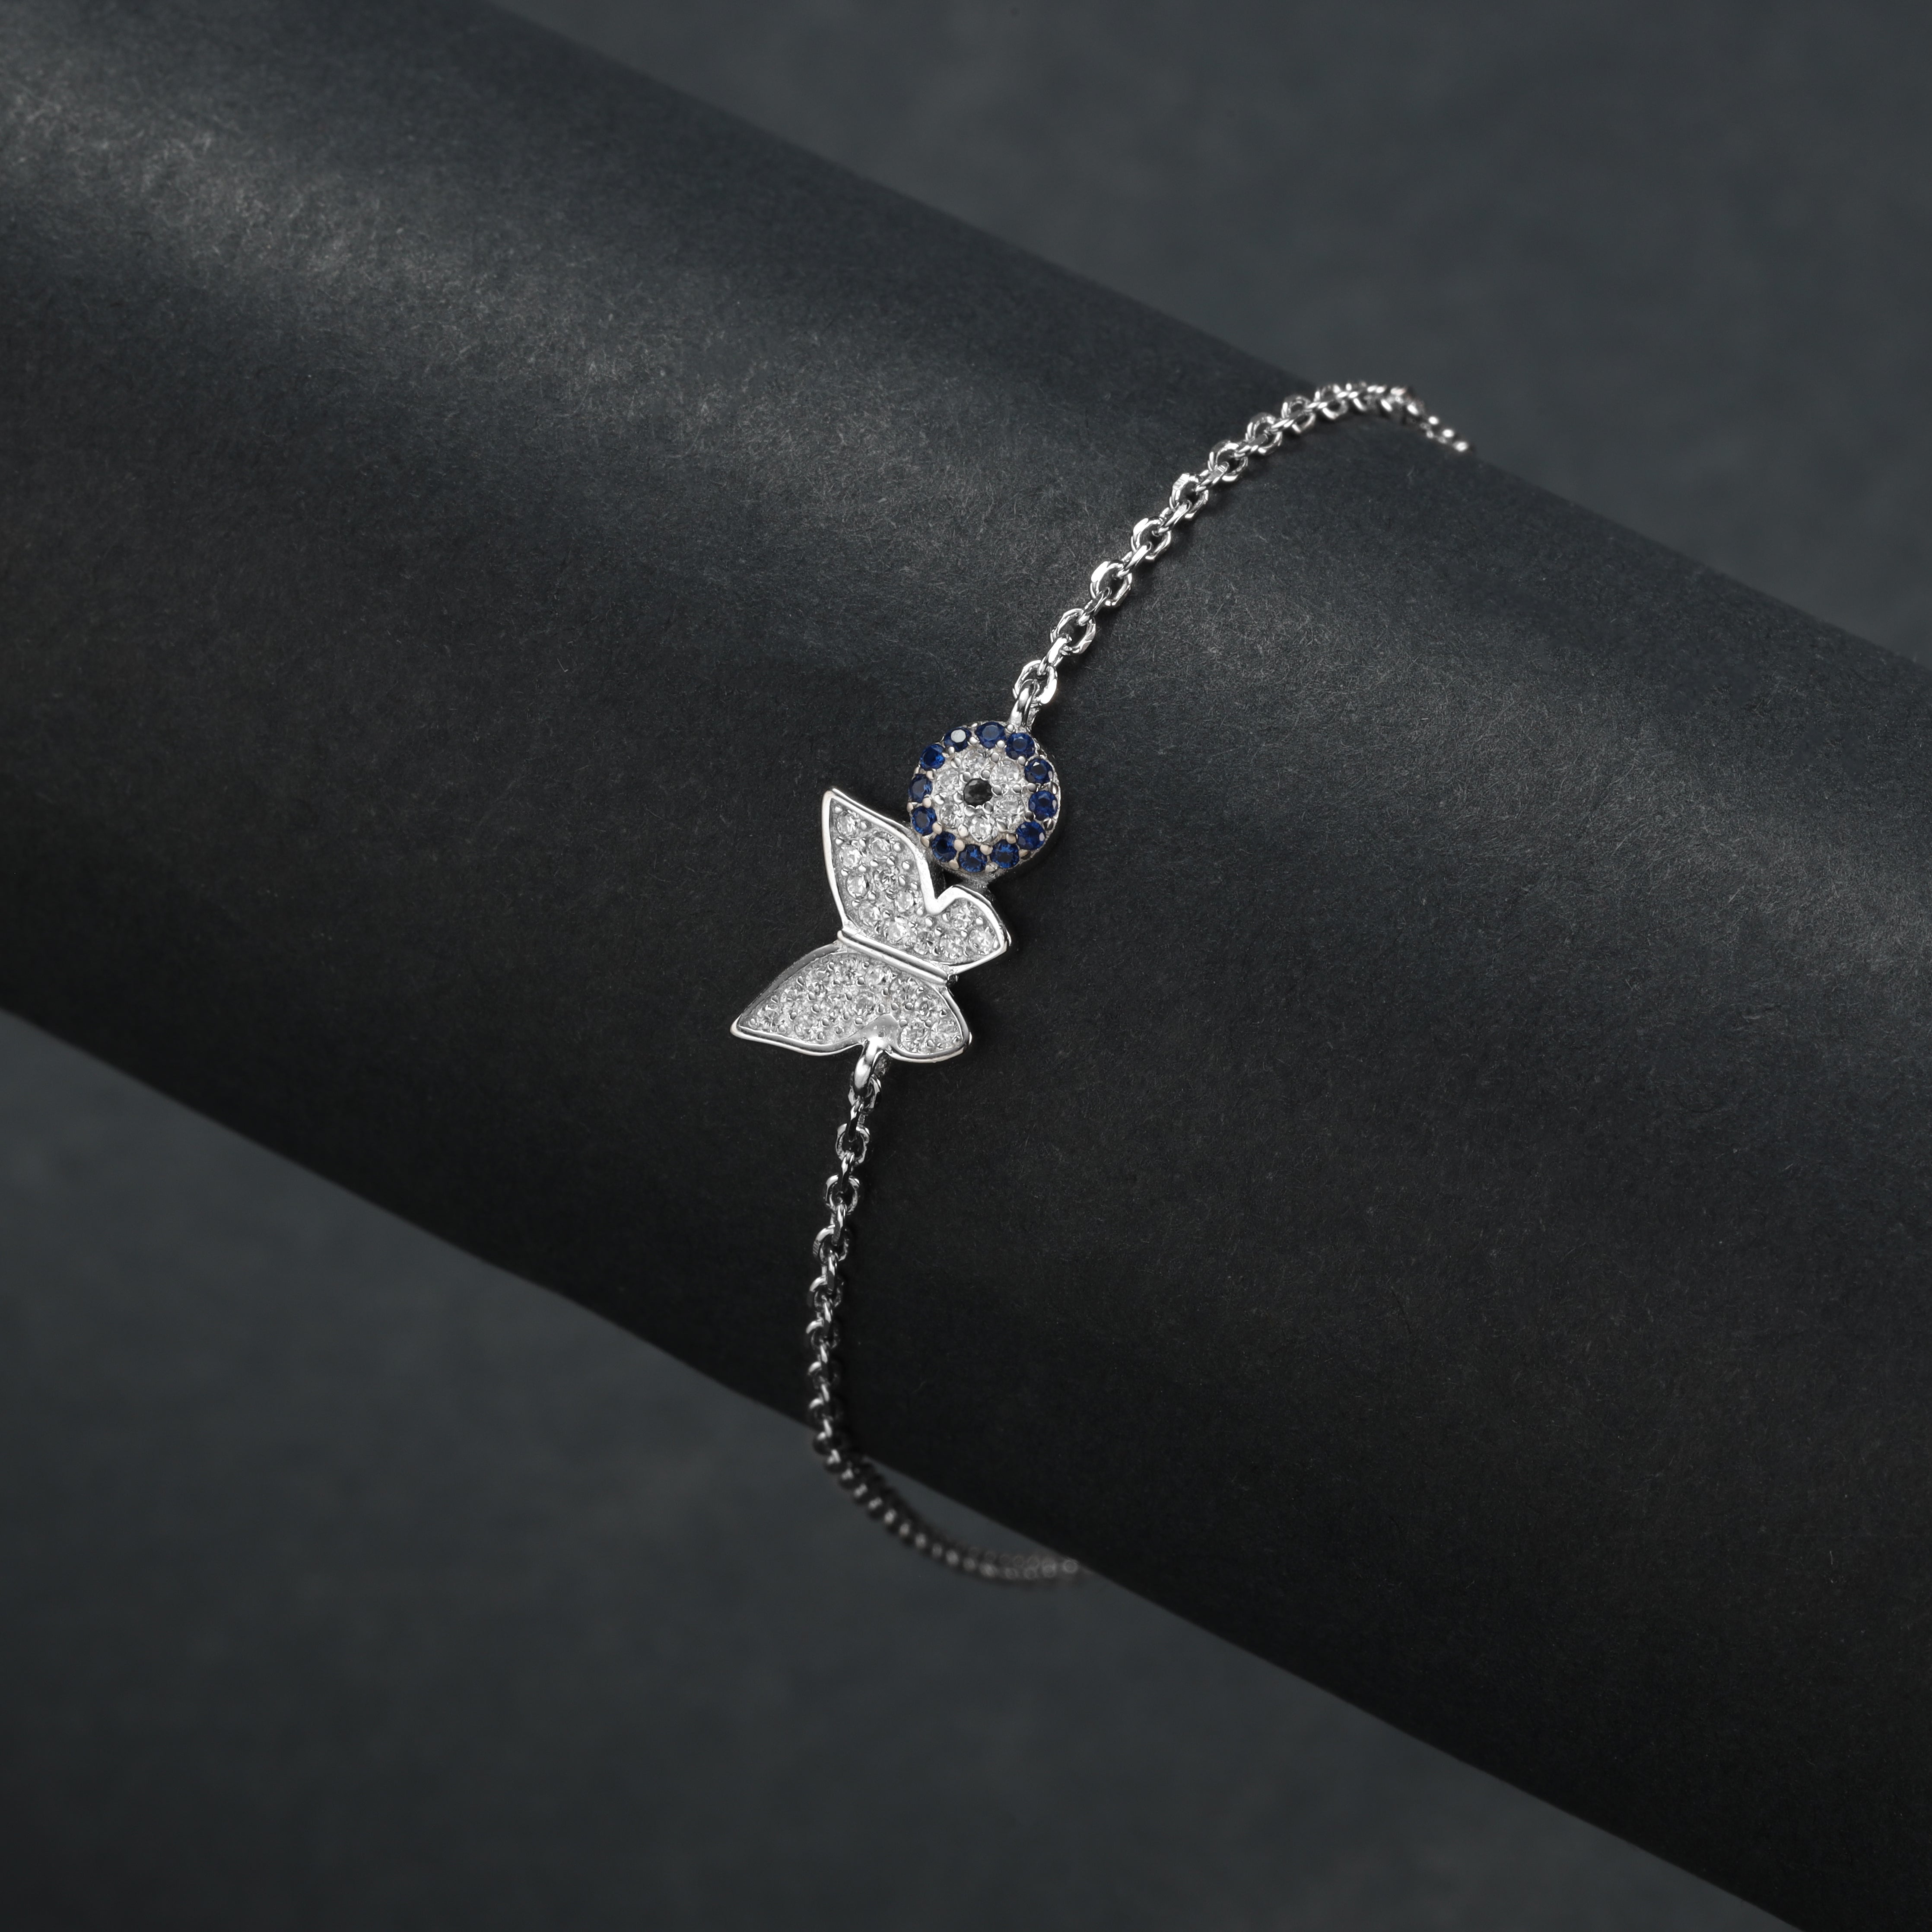 Damen Ankerkette Armband mit Zirkonia Schmetterling Motiv - aus 925 Sterlingsilber - Taipan Schmuck